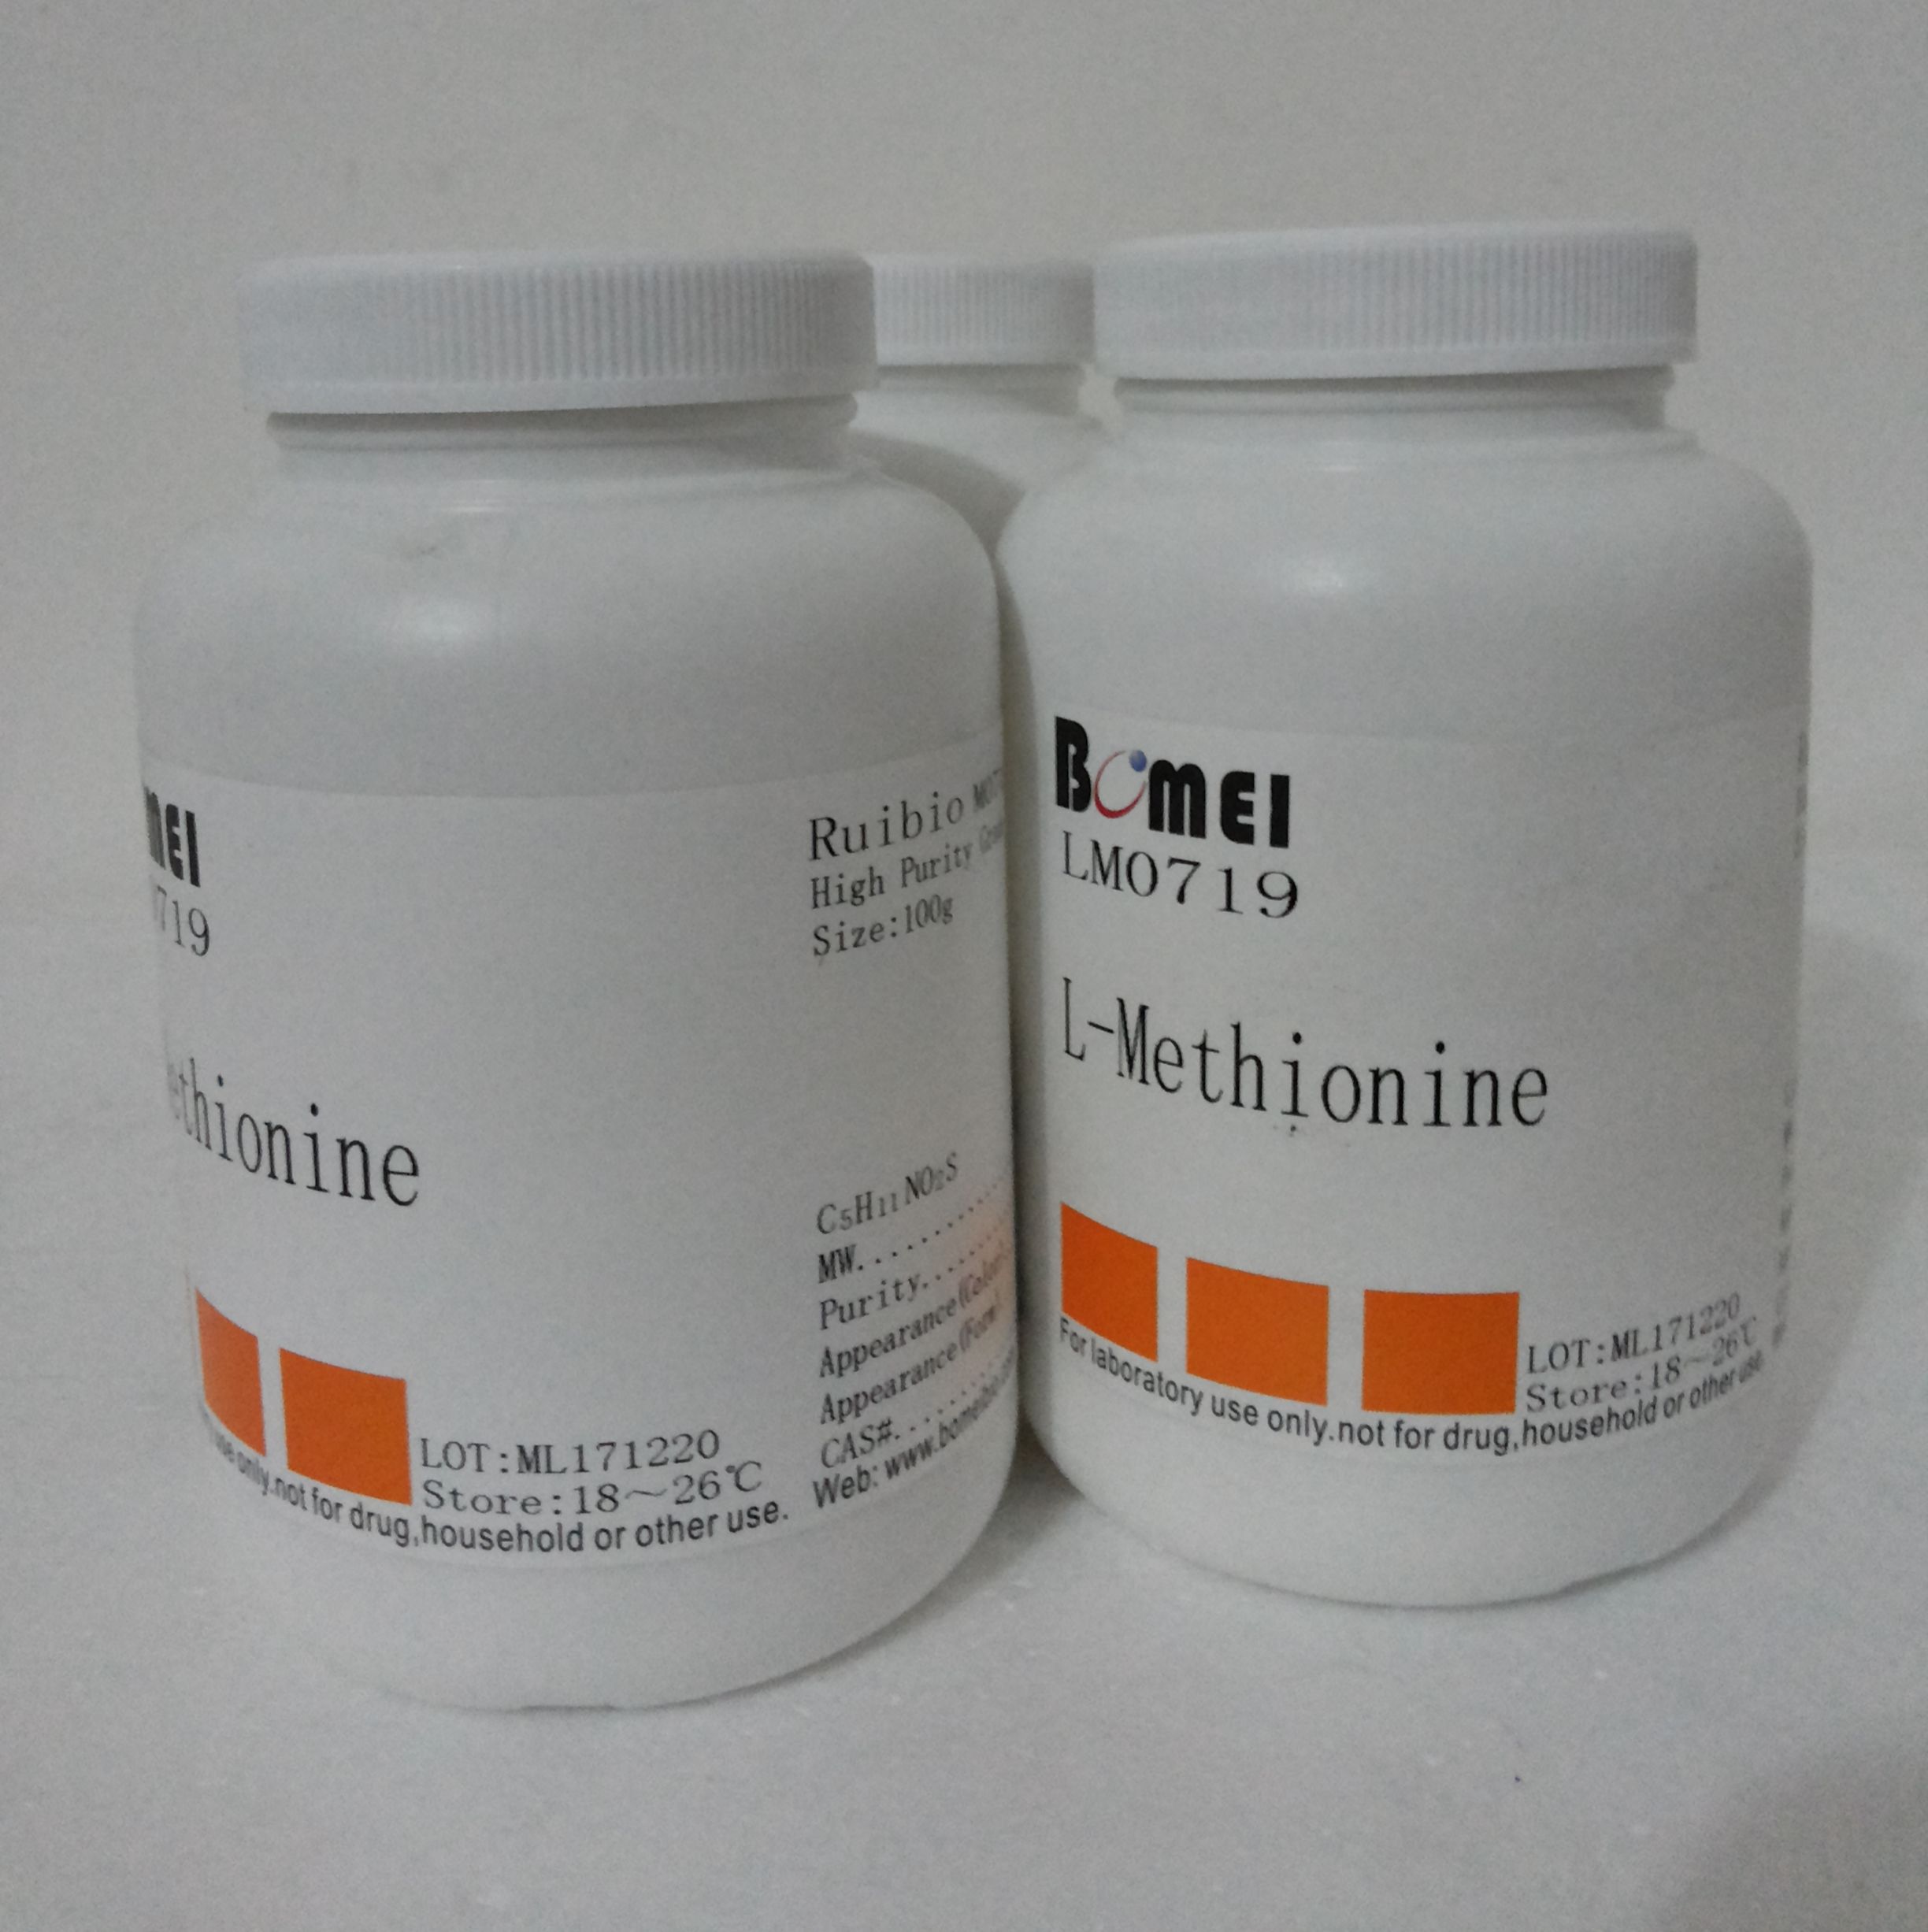 N-乙酰-DL-丝氨酸